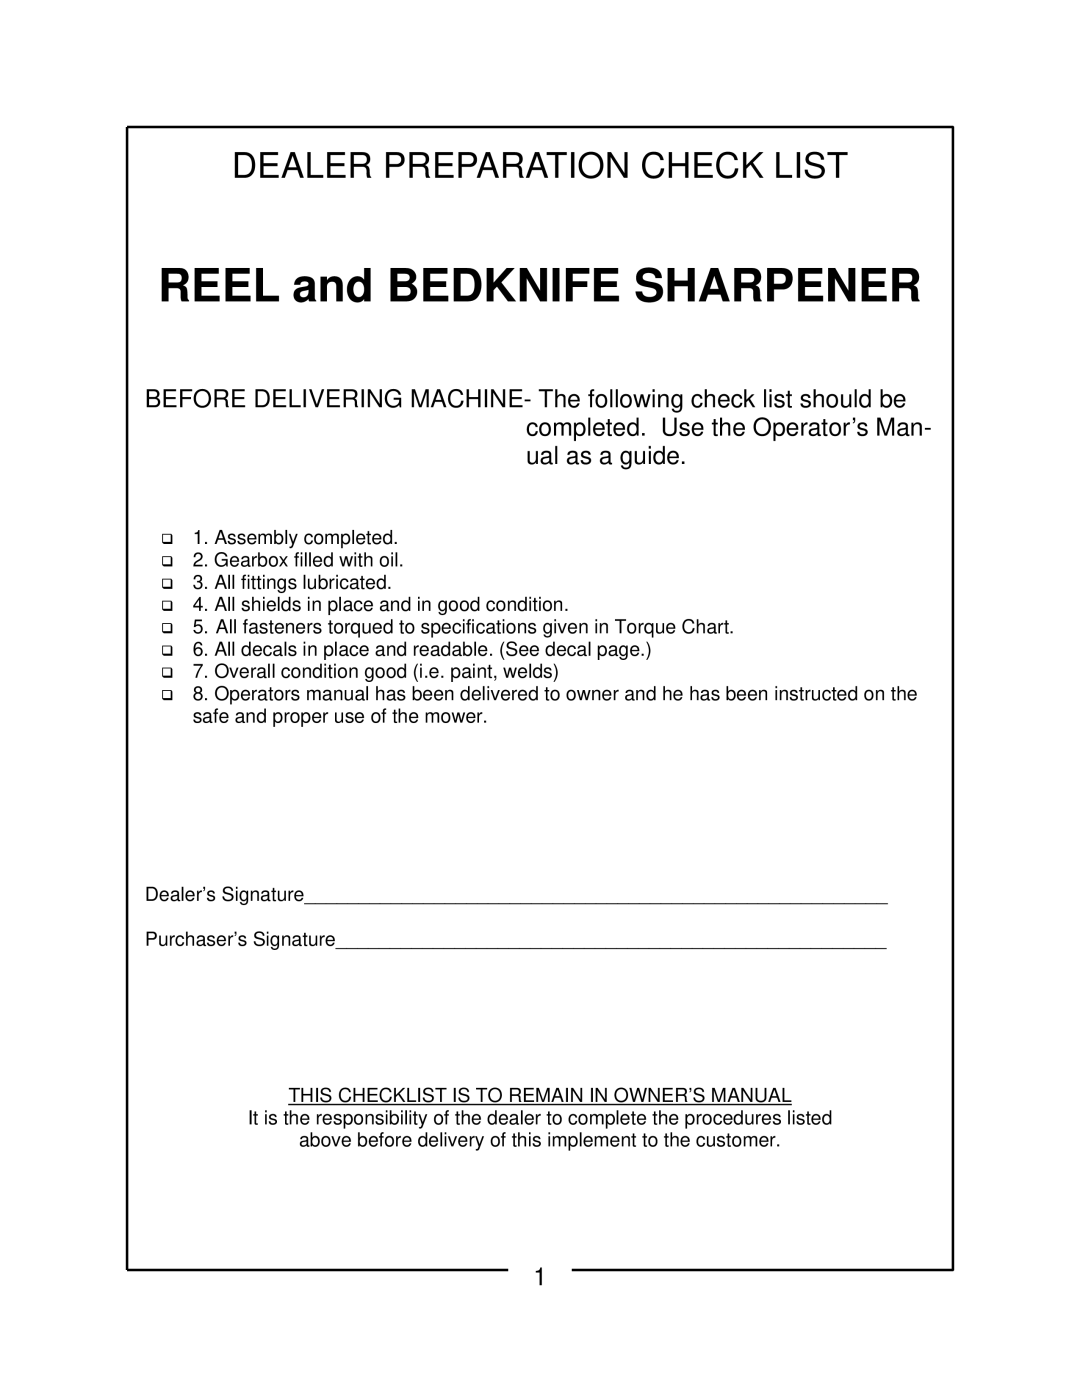 Locke RS-5100 manual REEL and BEDKNIFE SHARPENER, Dealer Preparation Check List 